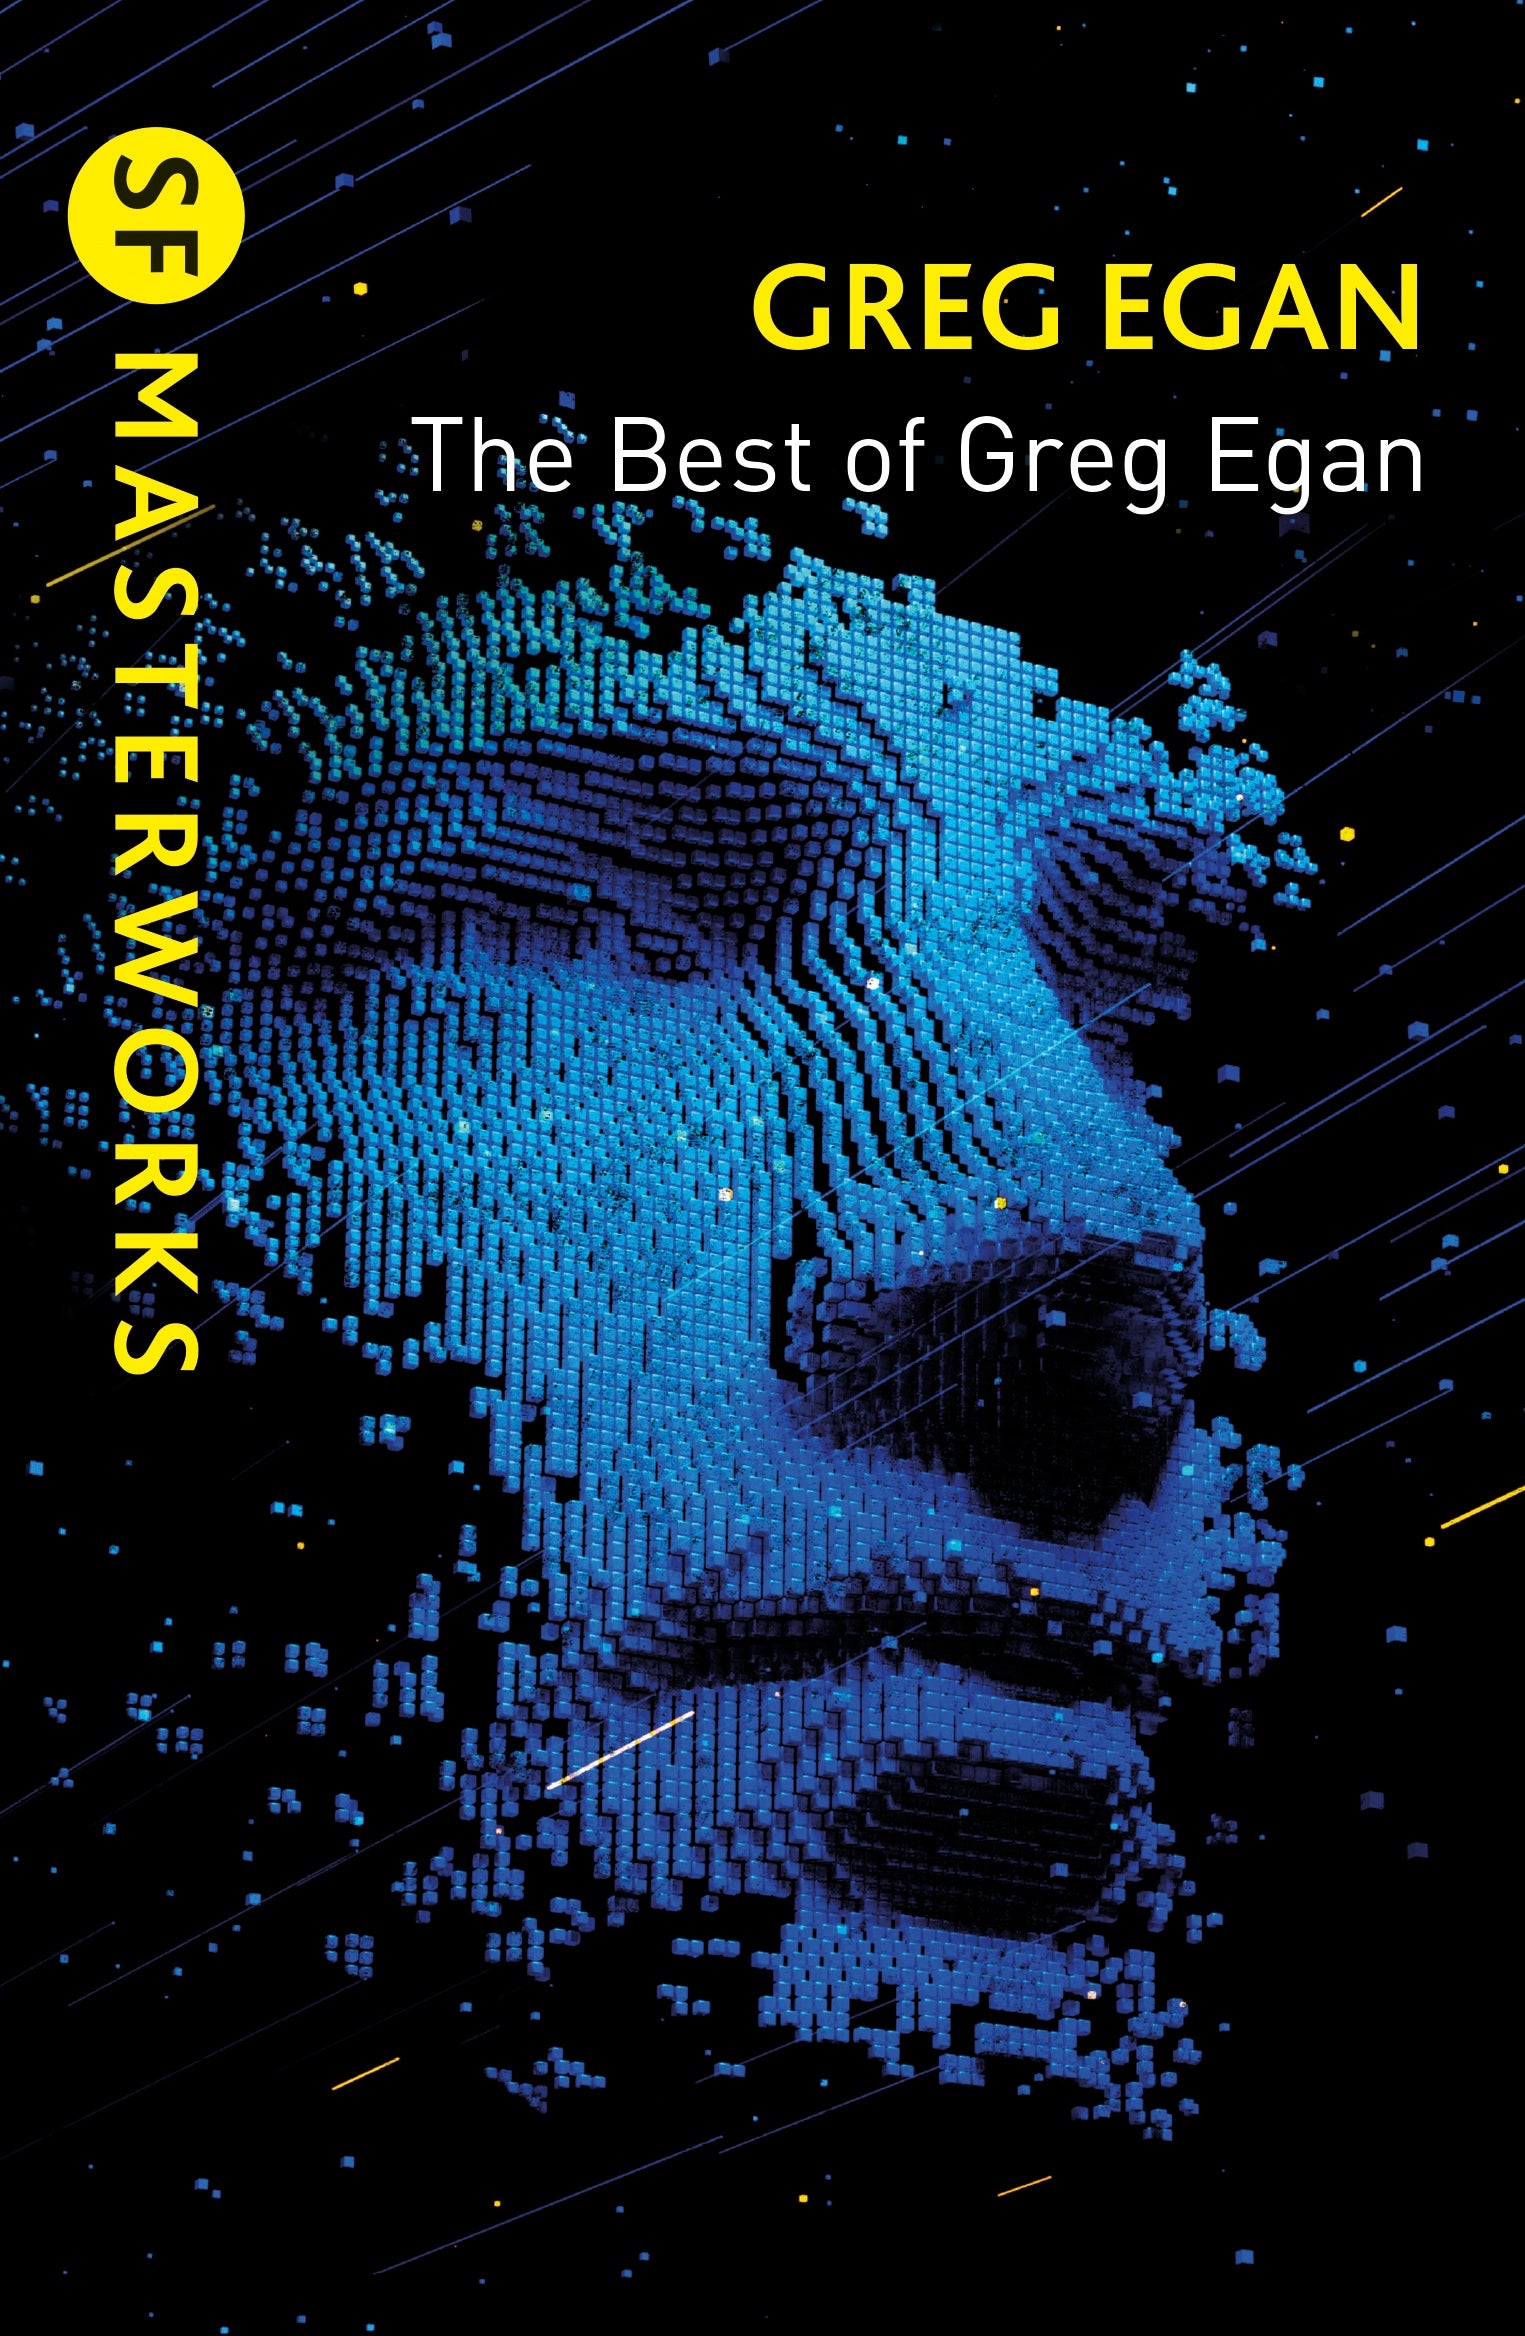 The Best of Greg Egan by Greg Egan